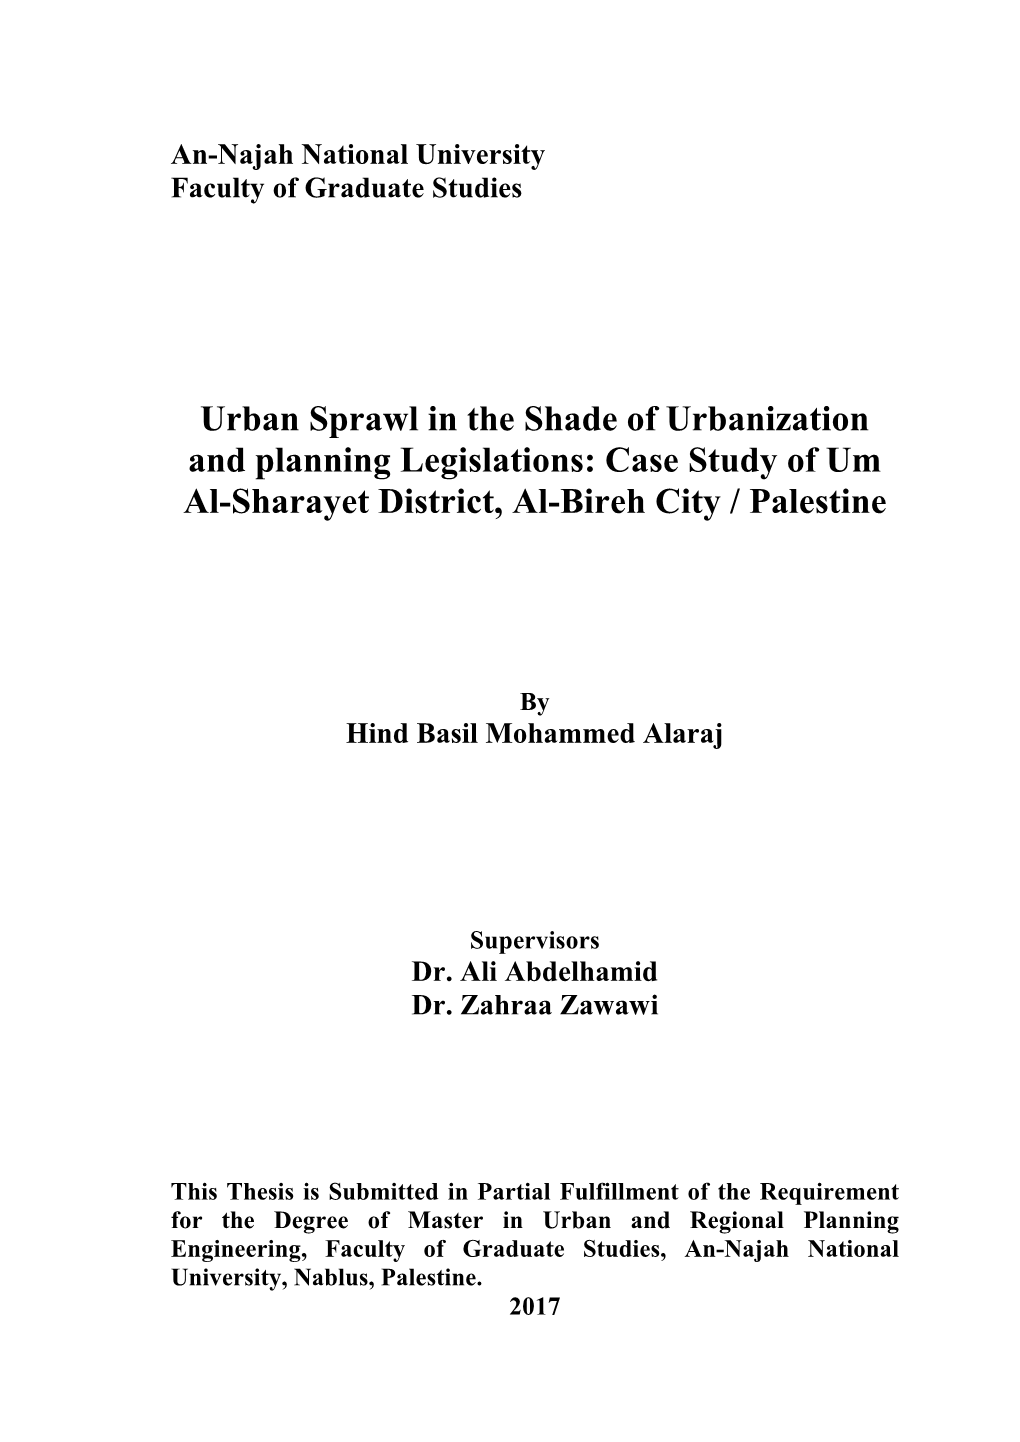 Case Study of Um Al-Sharayet District, Al-Bireh City / Pale